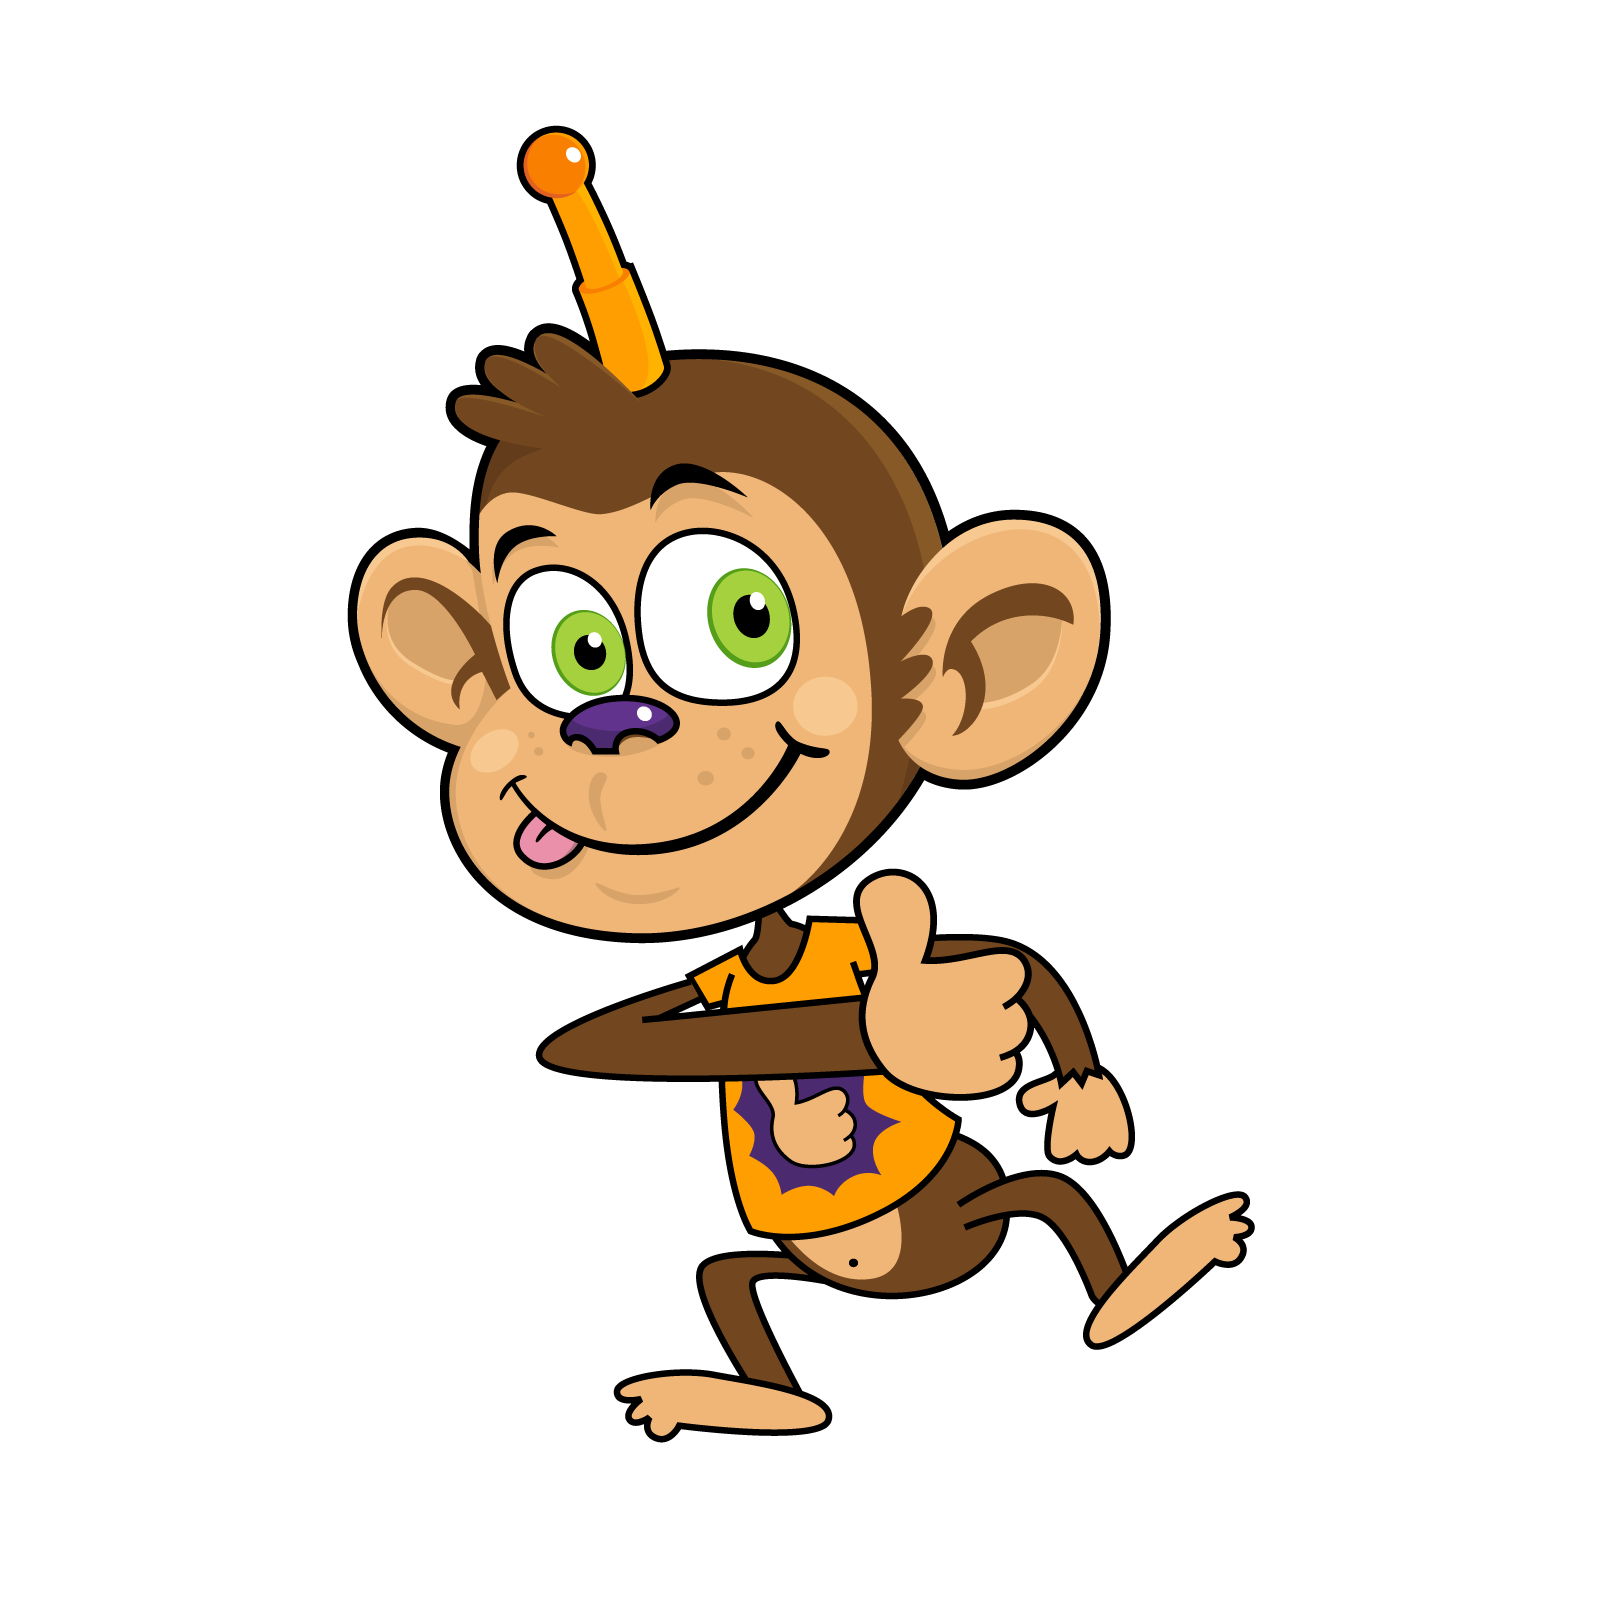 Персонаж обезьяна. Обезьяна рисунок. Обезьянка мультяшная. Веселая обезьянка на белом фоне. Смешная обезьянка из мультика.